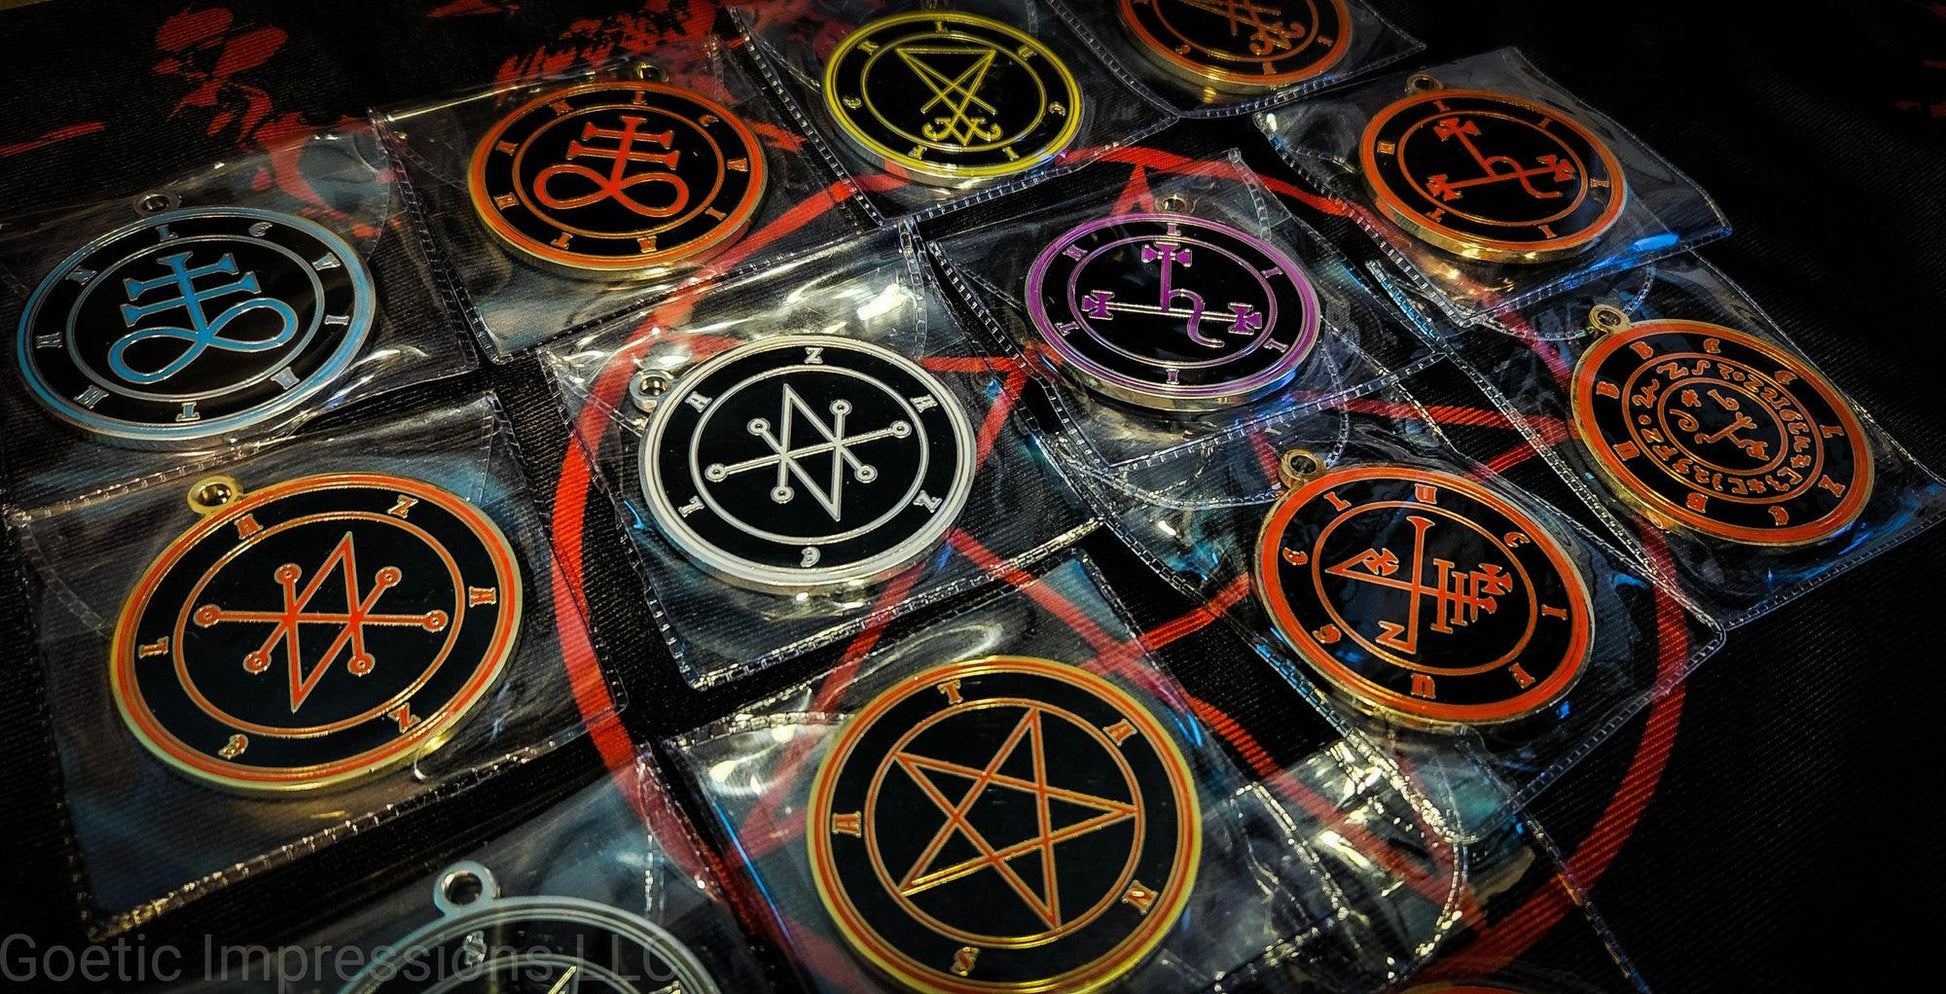 Satanic Sigil and Seal medallions